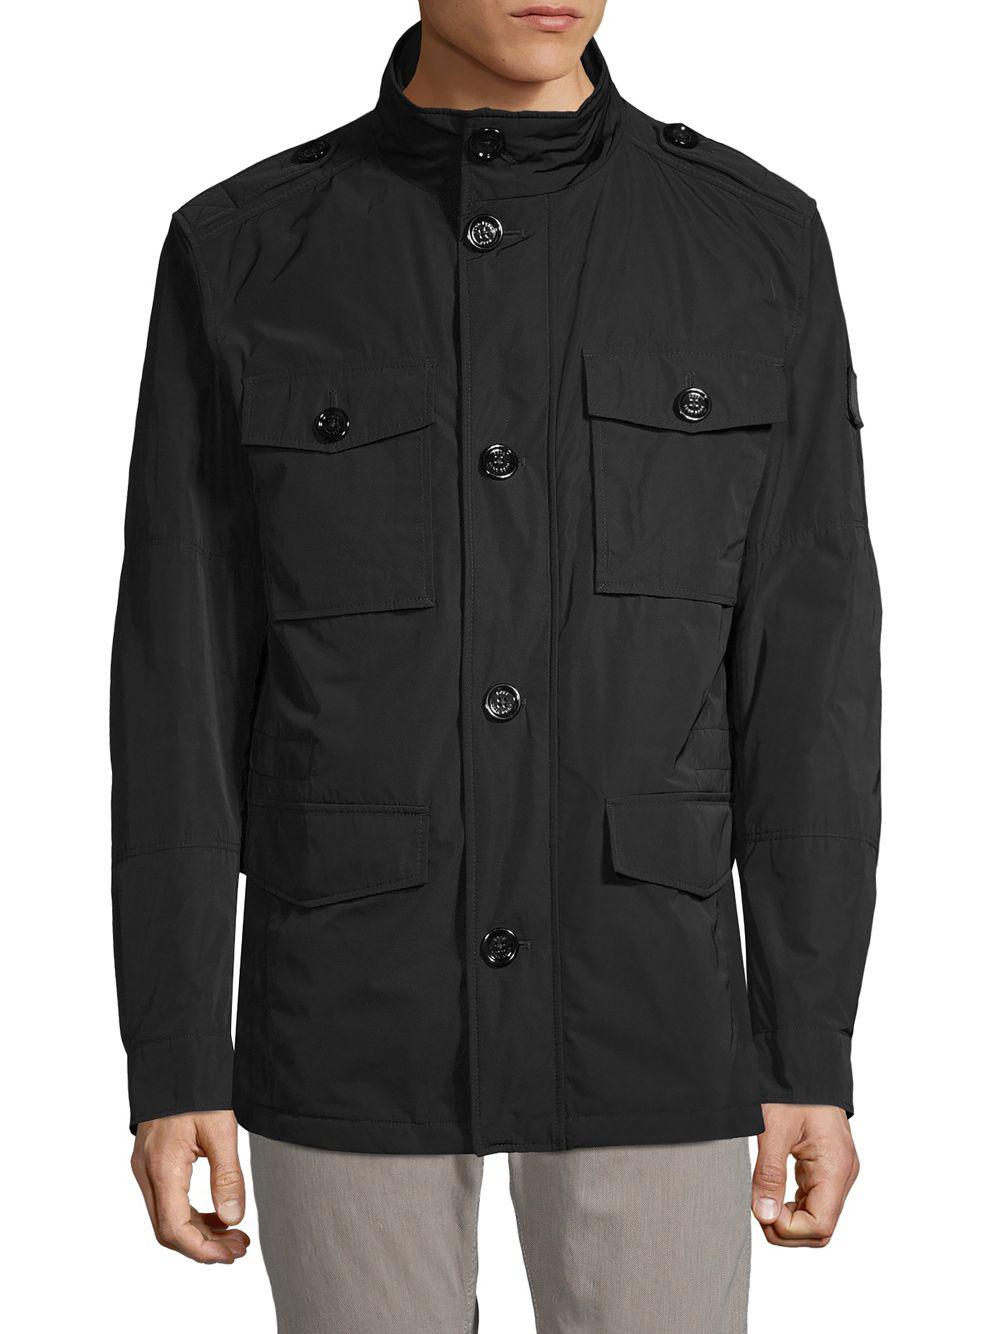 BOSS by HUGO BOSS Synthetic Camino Field Jacket in Black for Men - Lyst